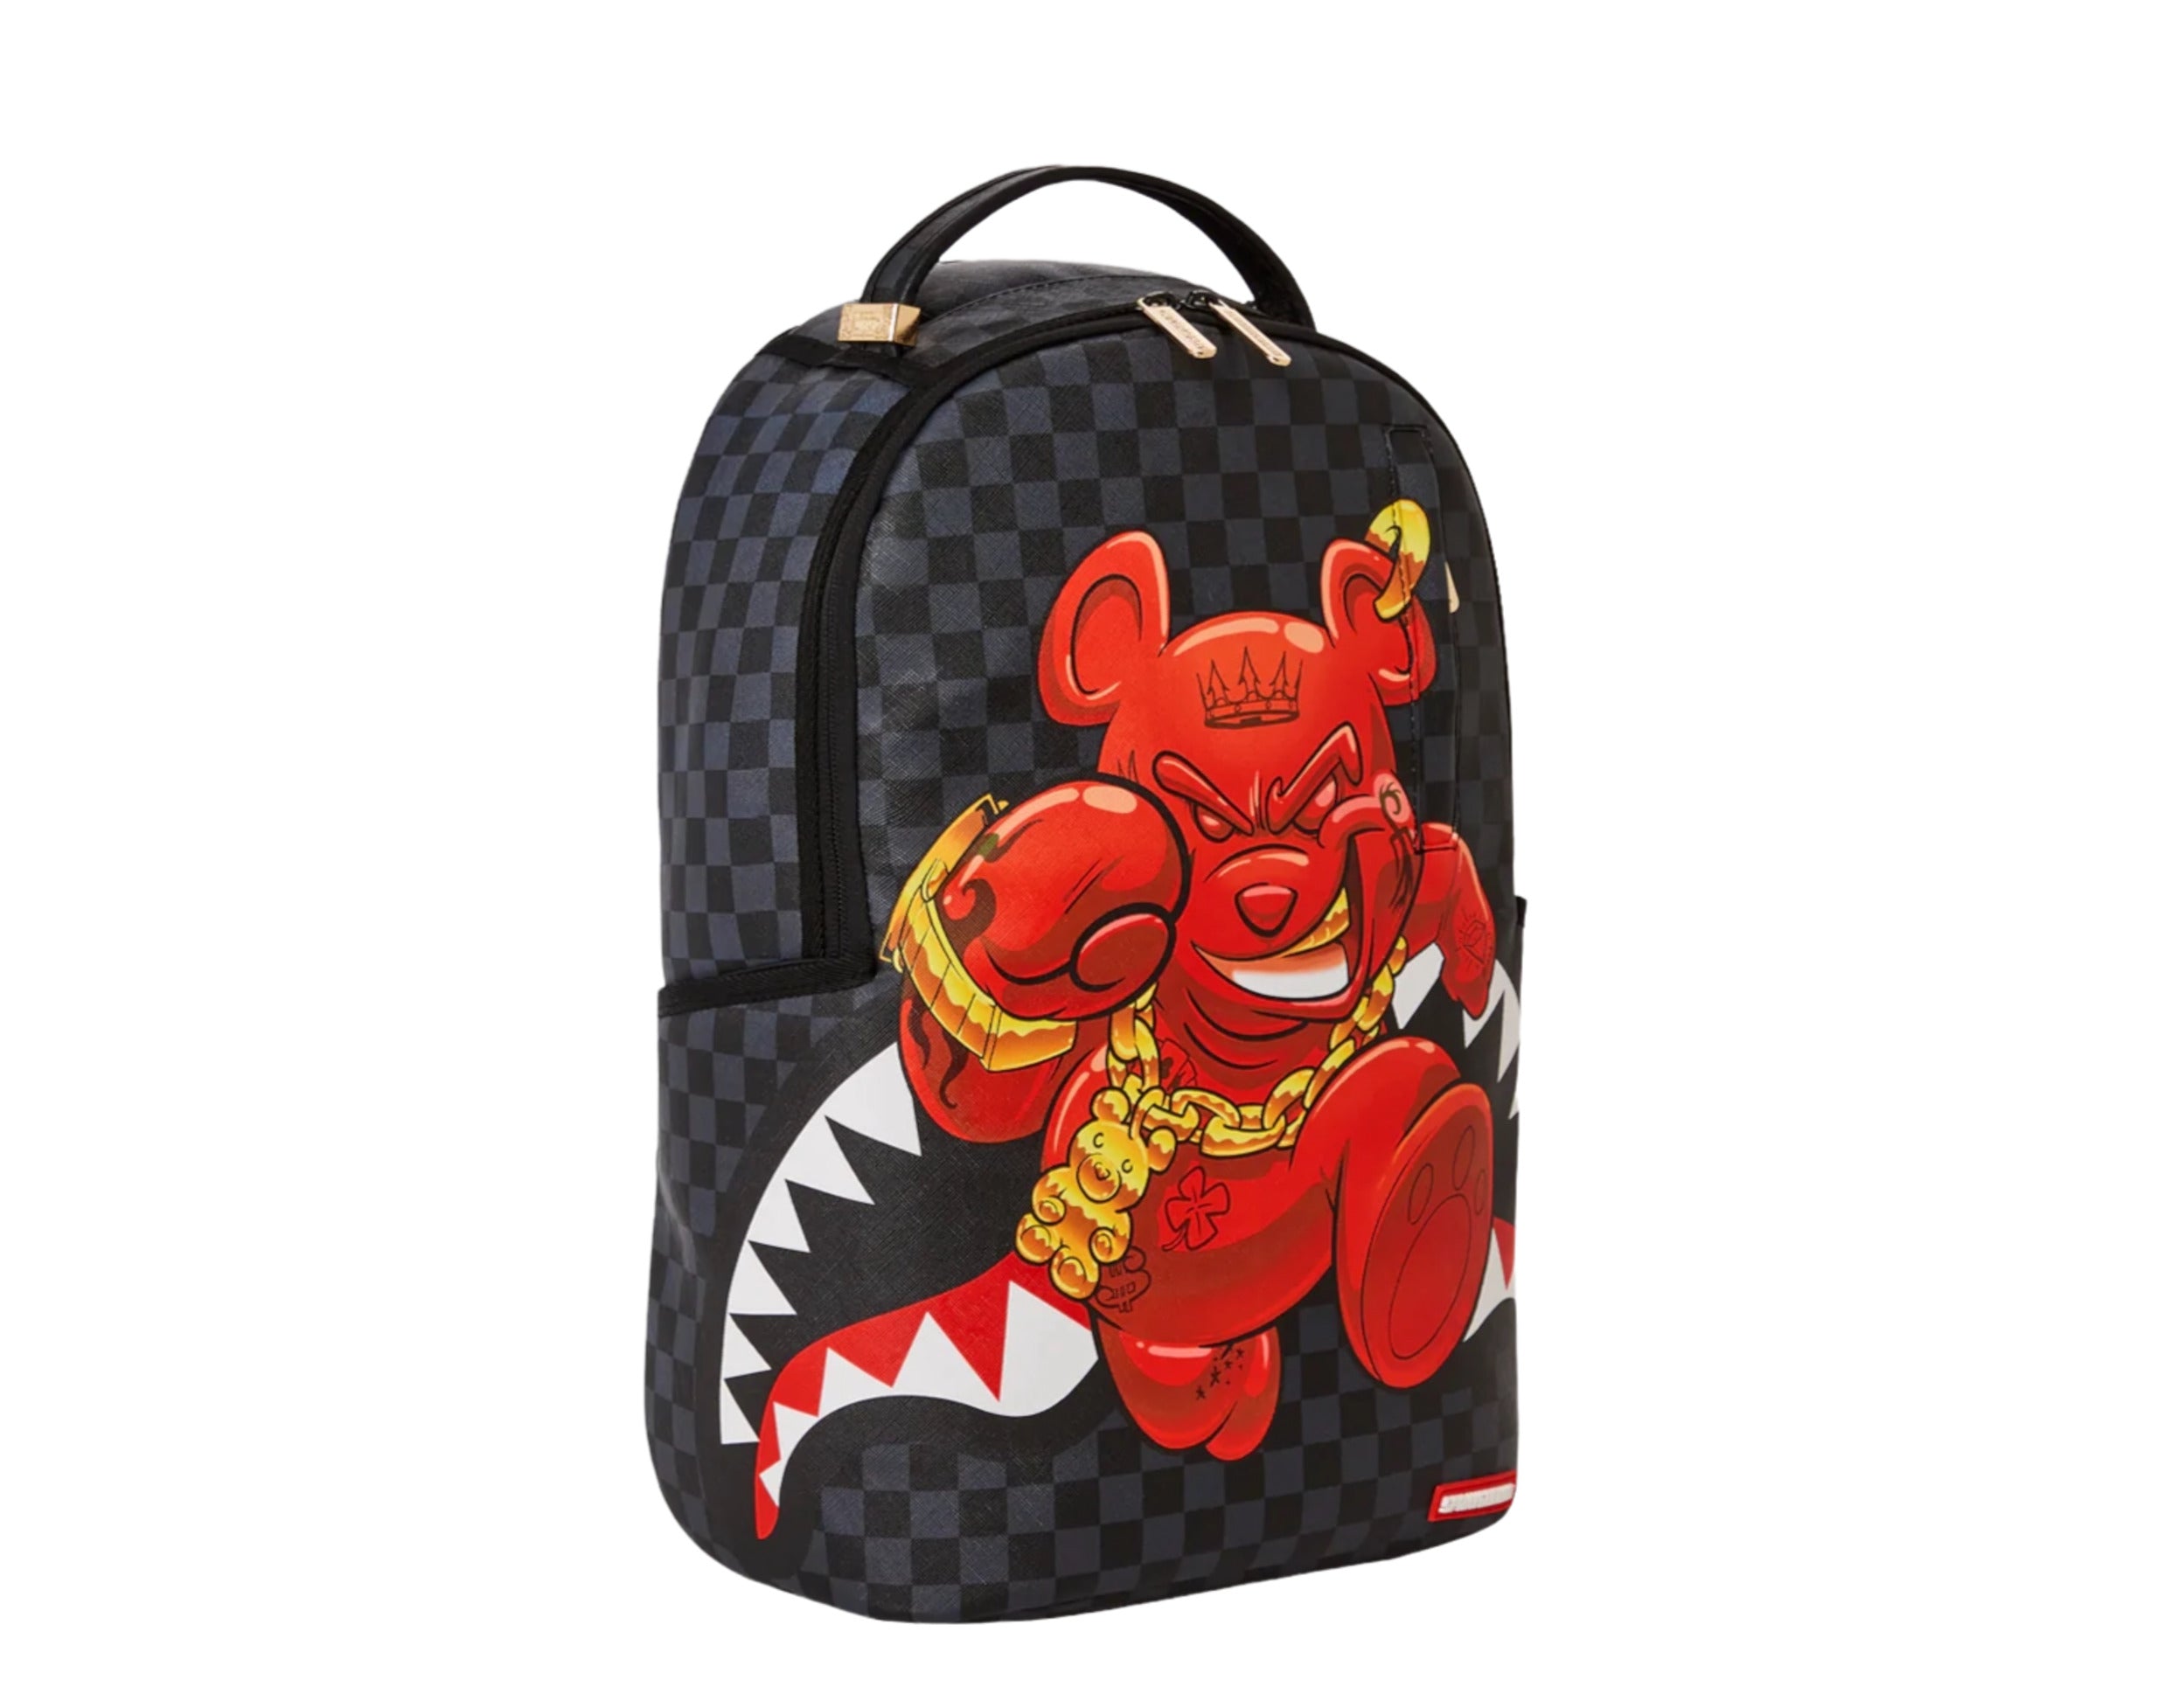 Sprayground Diablo The First Bear Backpack – DTLR